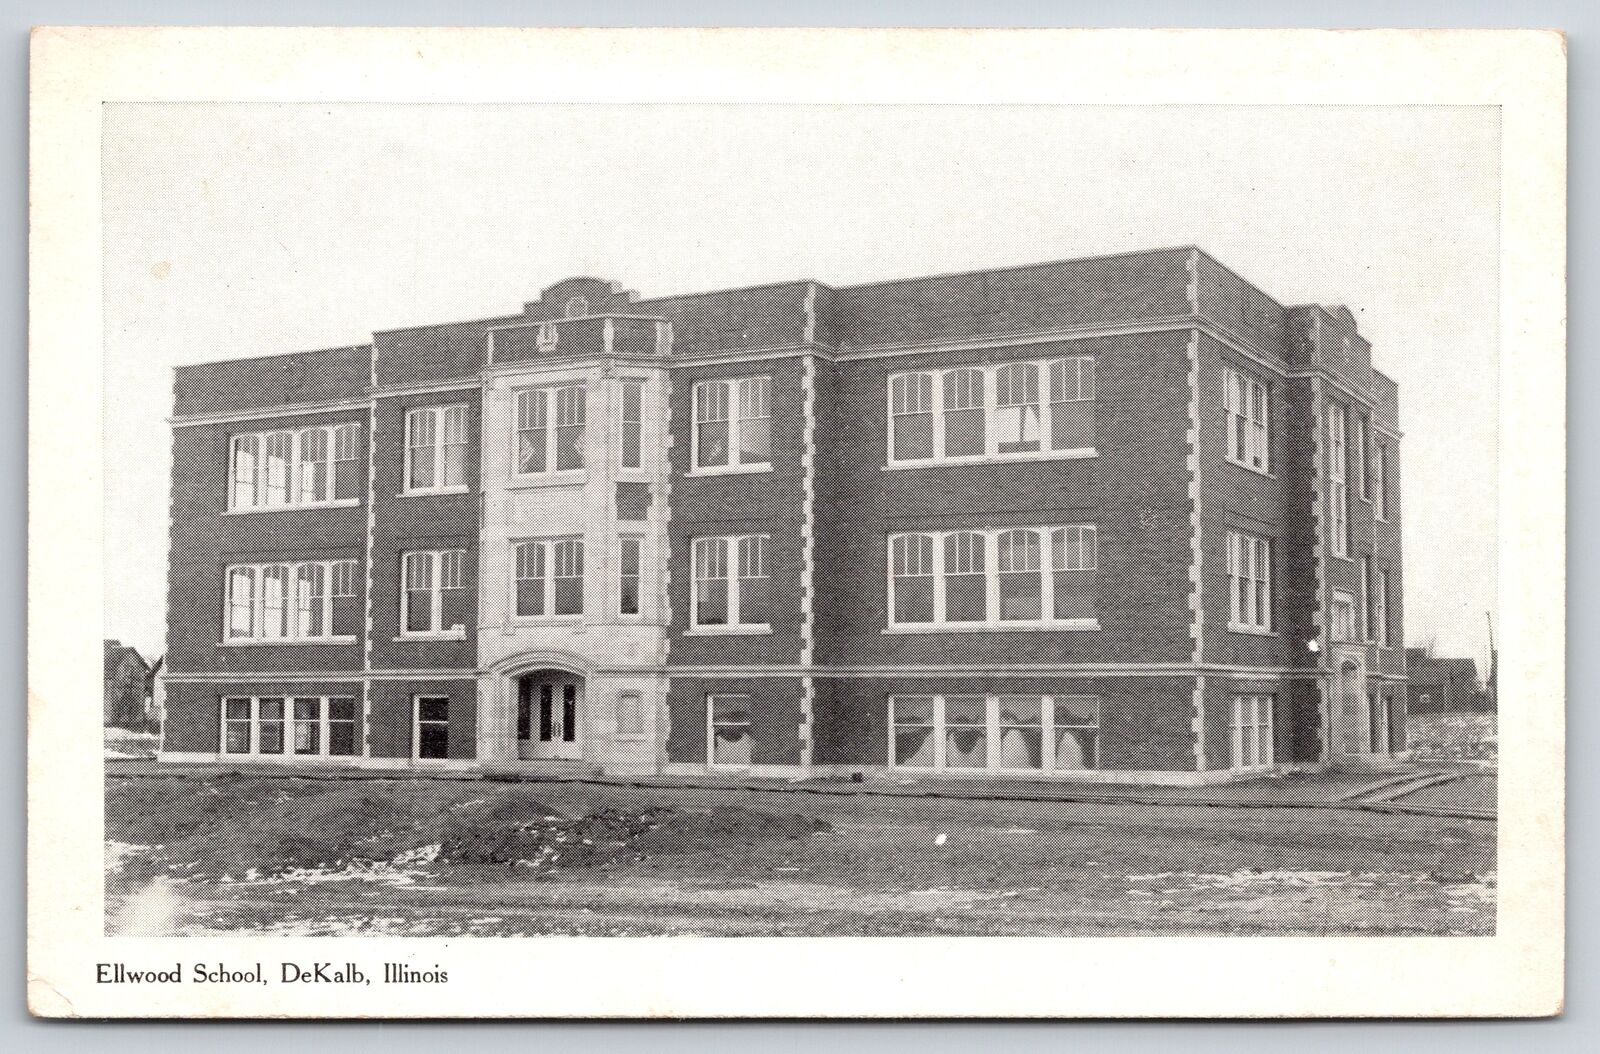 DeKalb Illinois~Ellwood School Building~Houses in Distance~1920s B&W Postcard